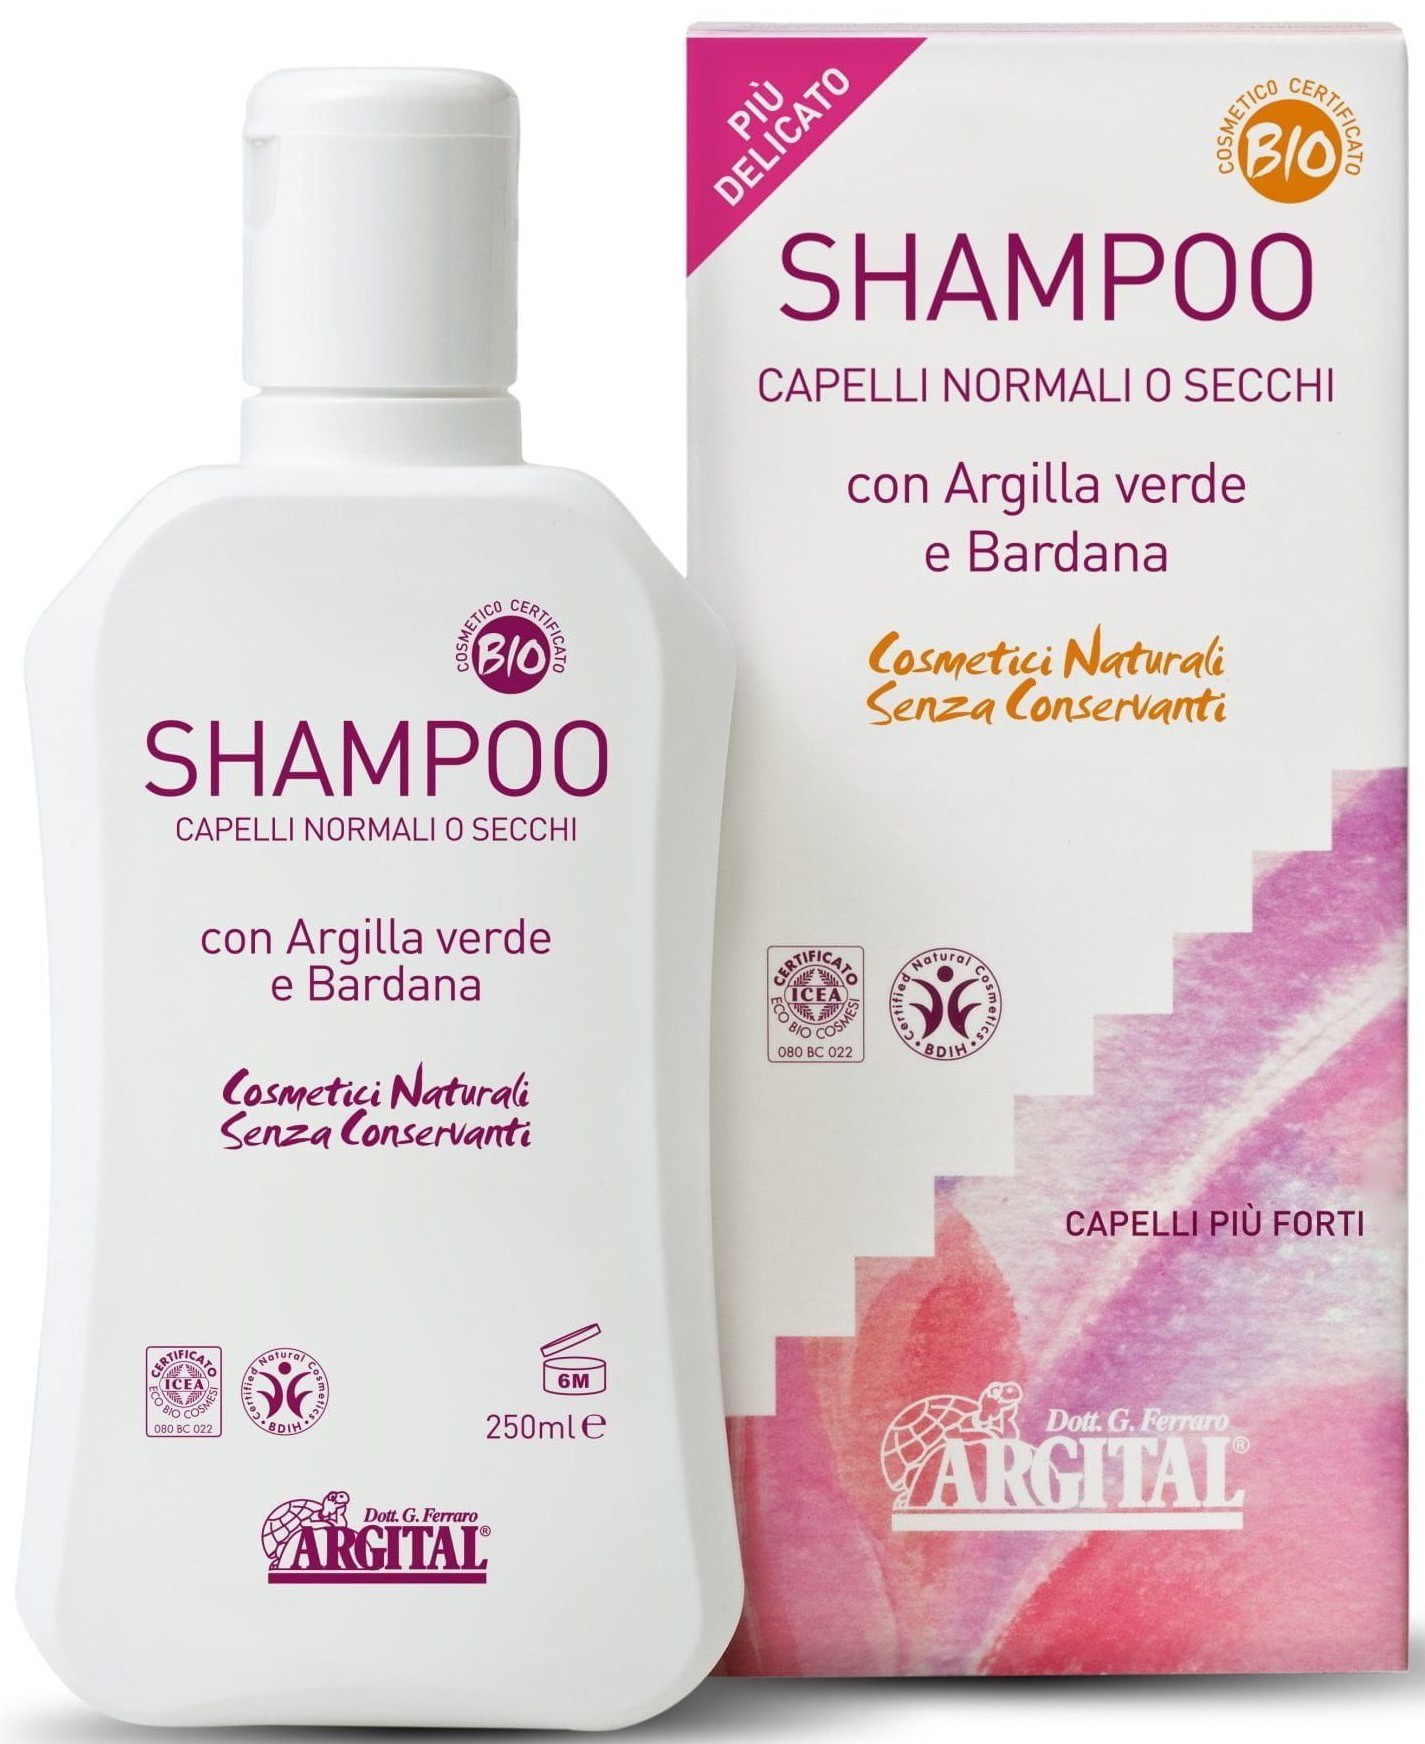 Argital Shampoo For Normal Hair